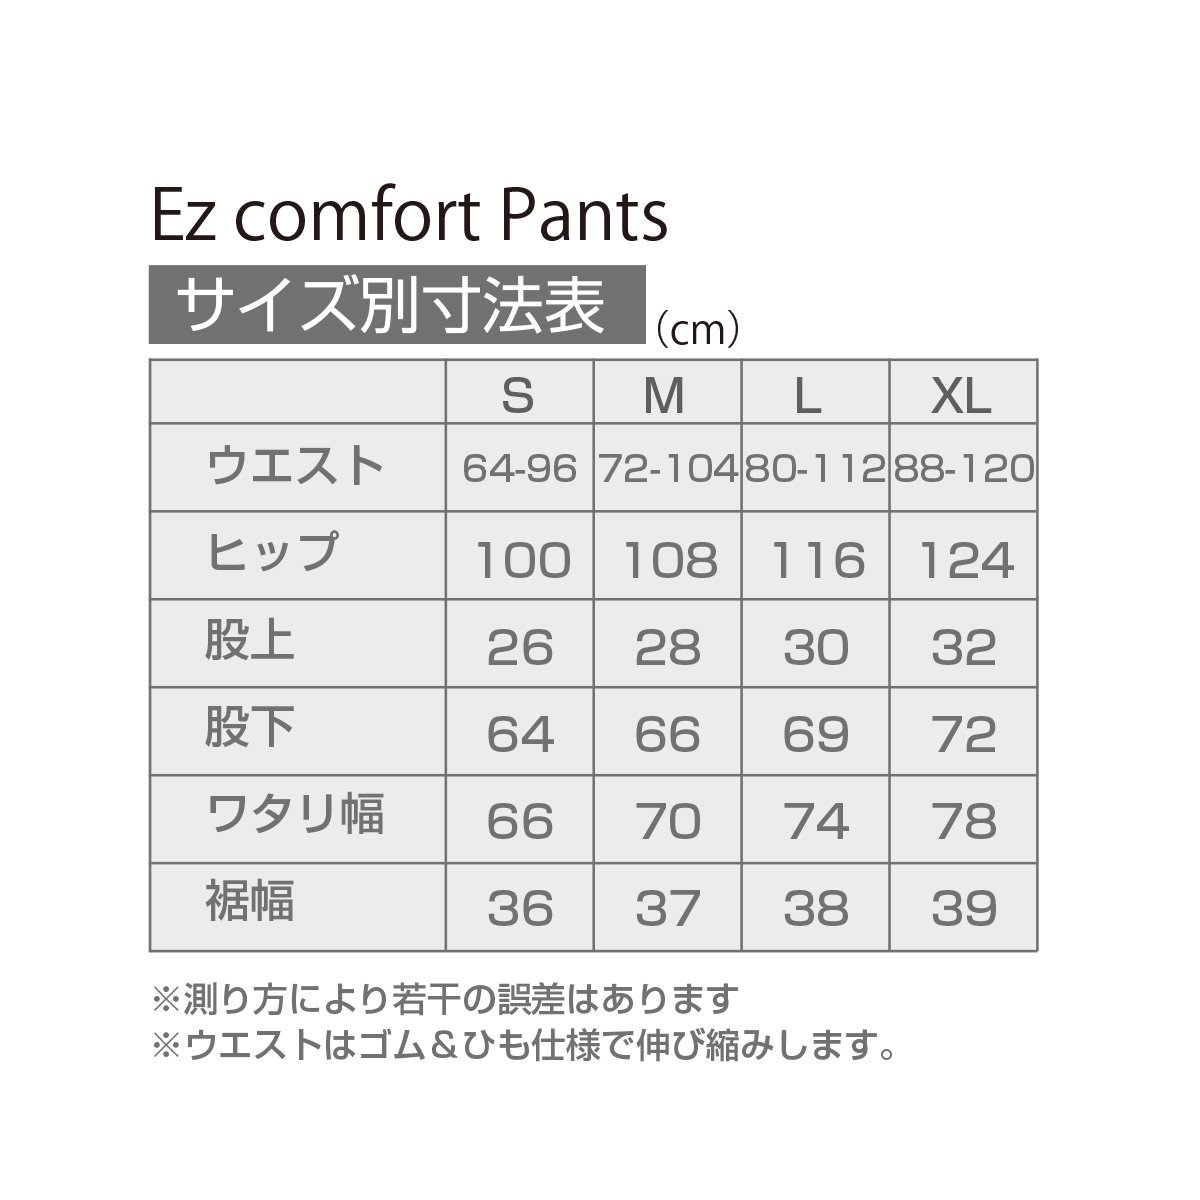 Ez comfort Pants